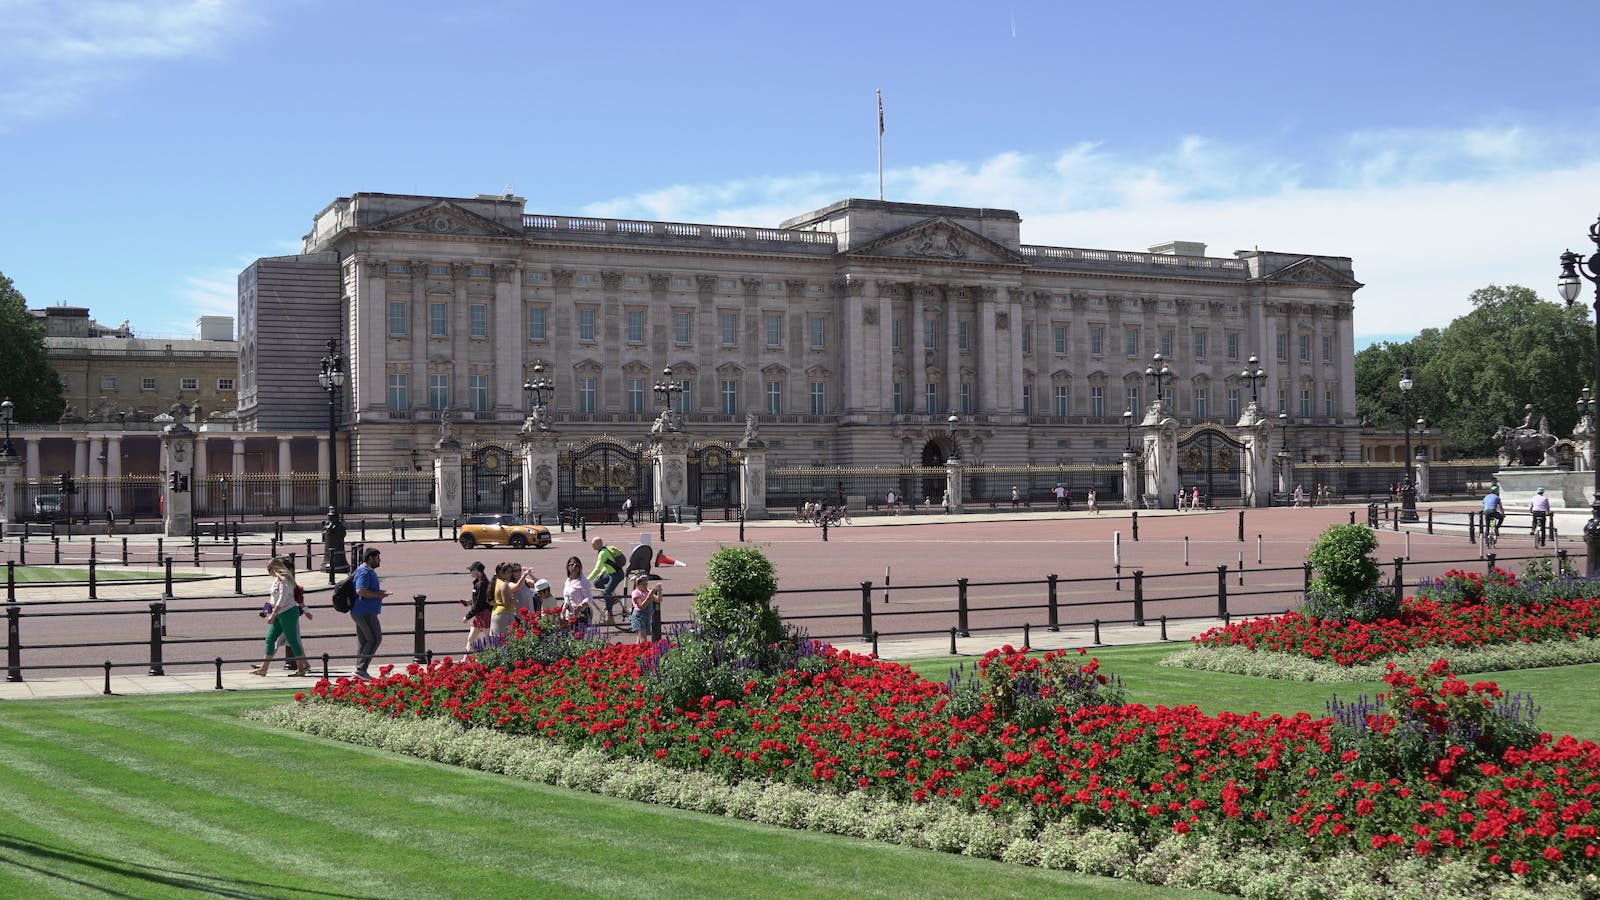 Royal Walking london tour